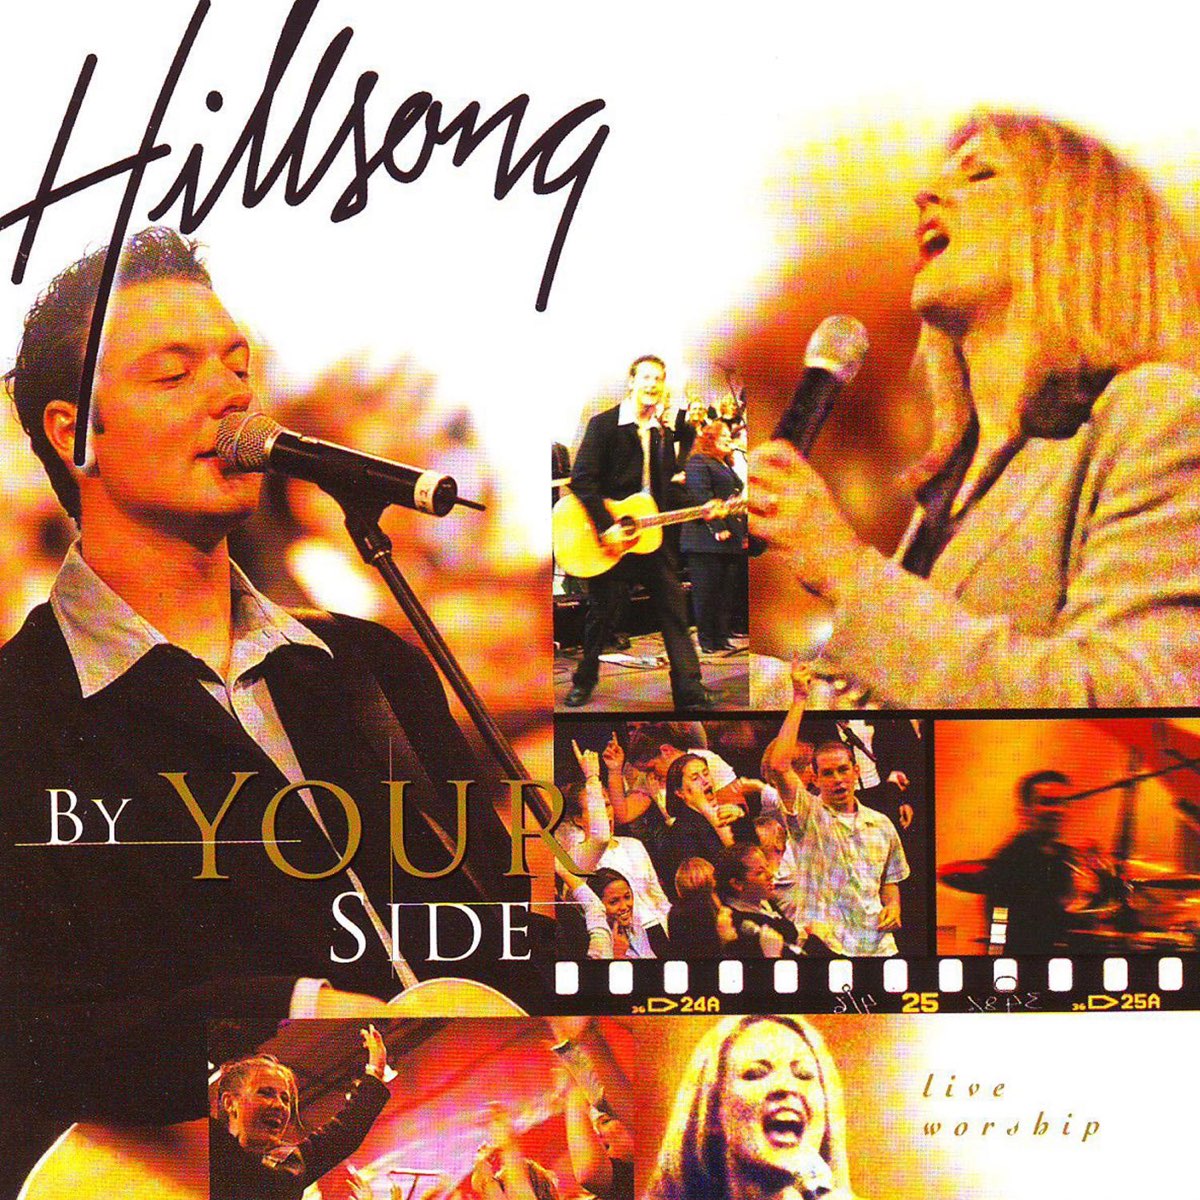 Hillsong Worship Discography, Hillsong, Hillsong Live, Hillsong